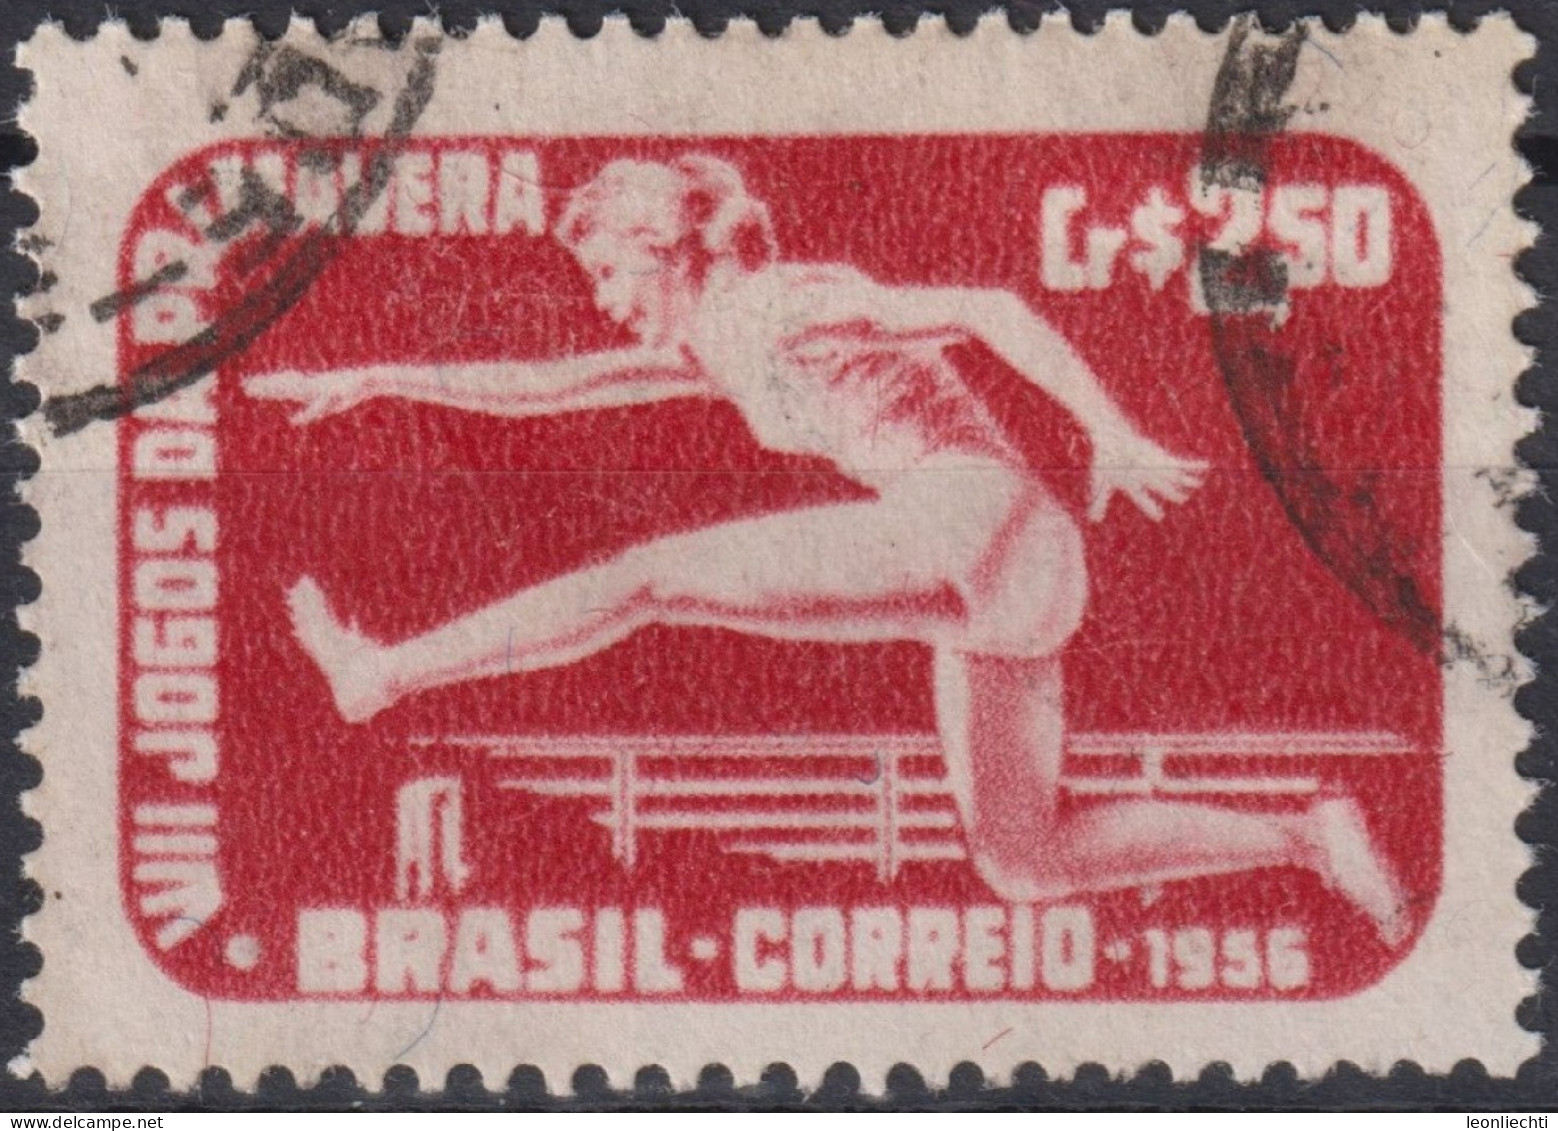 1956 Brasilien ° Mi:BR 898, Sn:BR 840, Yt:BR 624, 8th Spring Games /RJ, Sport - Usati